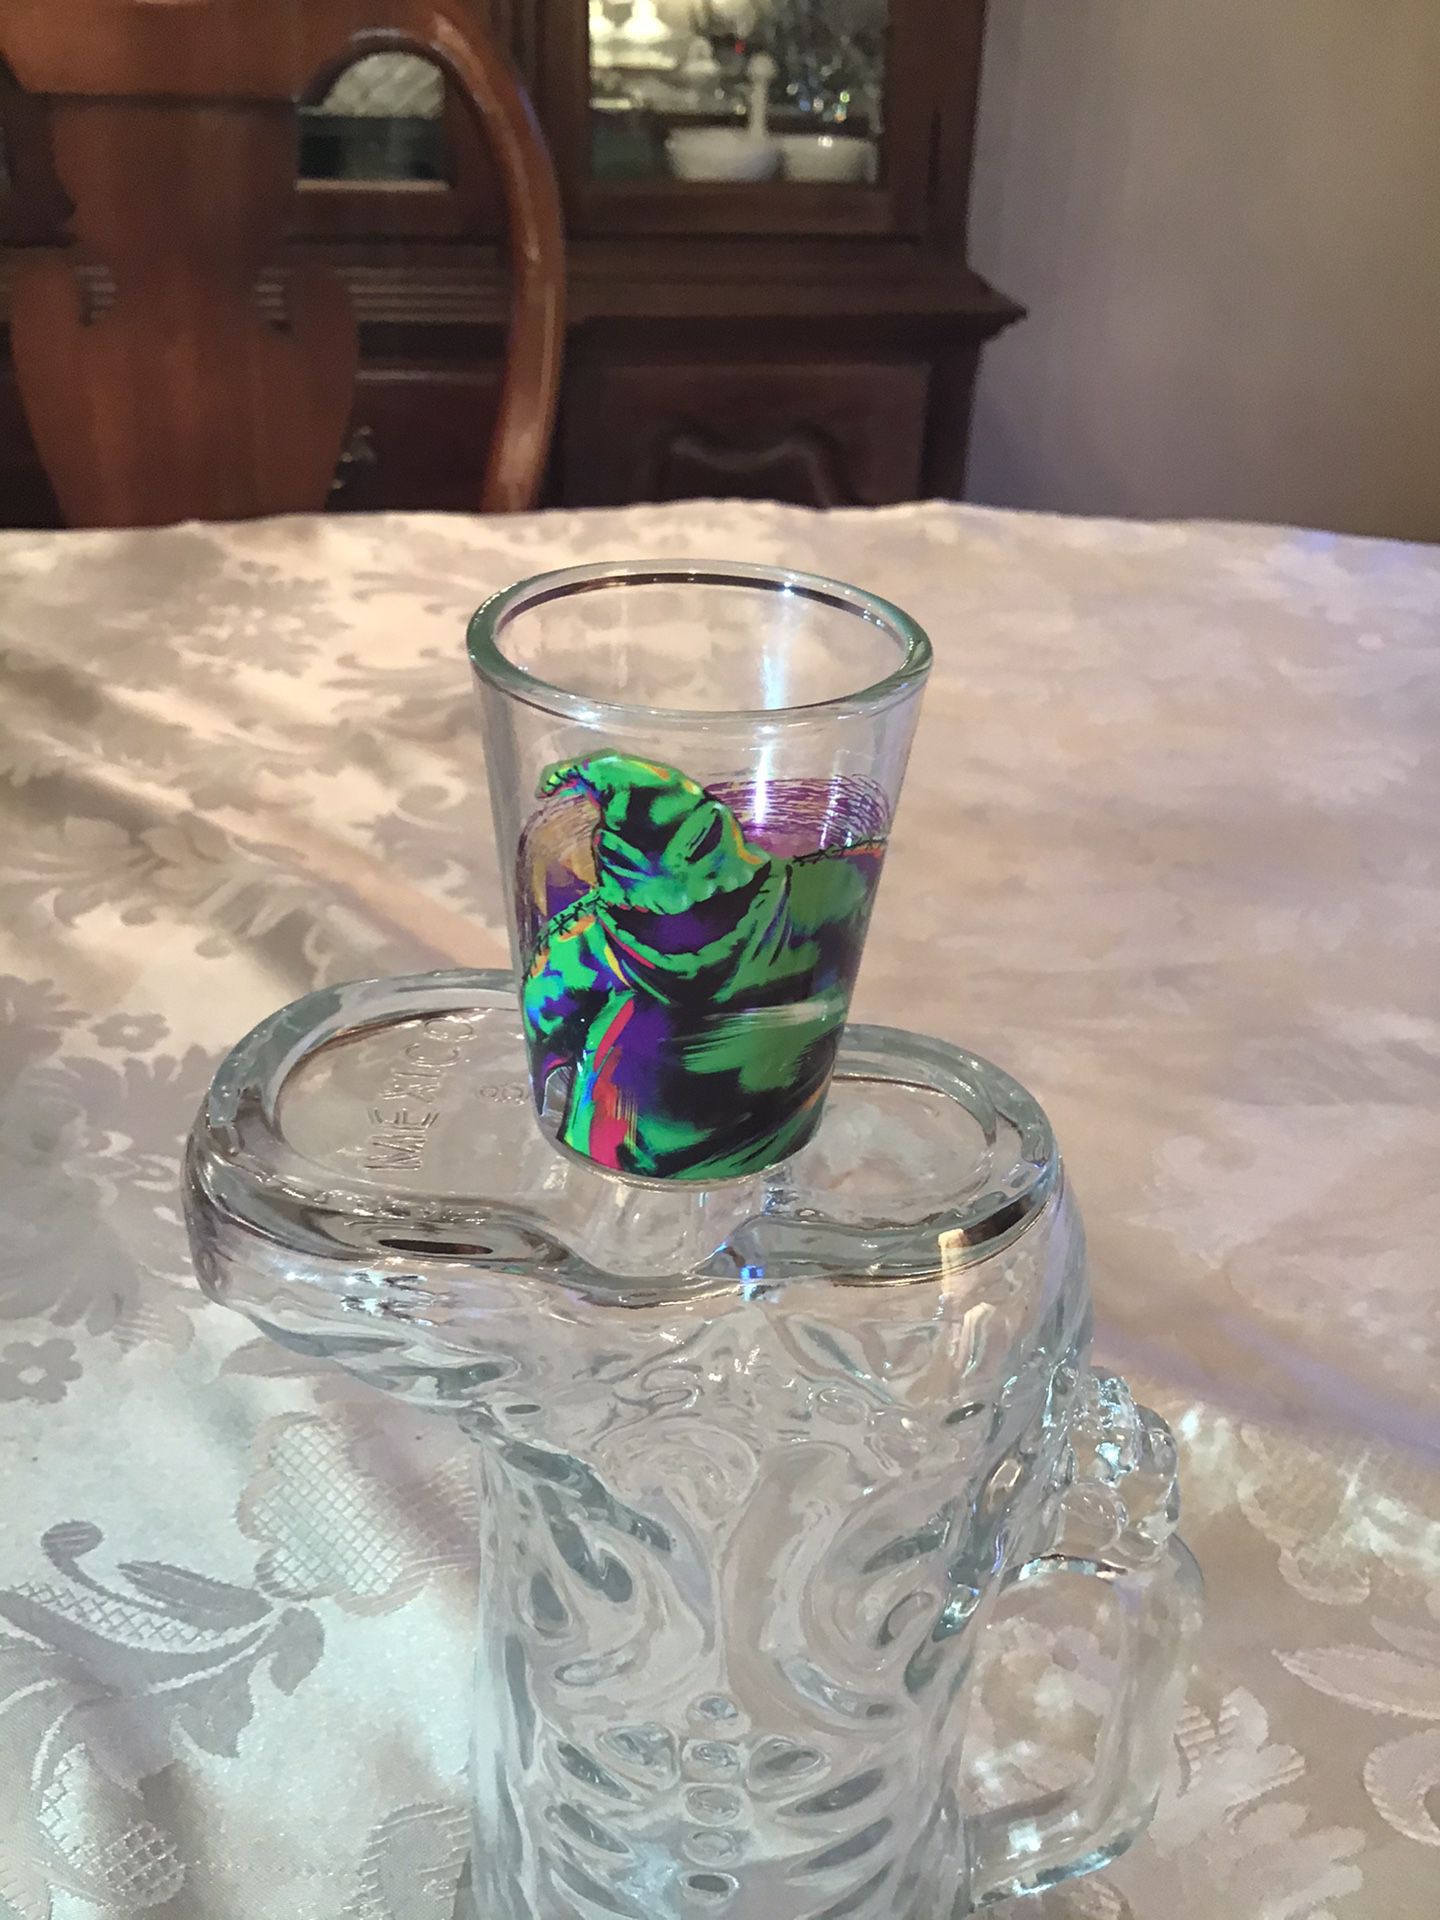 PENDING—Collectible Nightmare Before Christmas Shot Glass Set